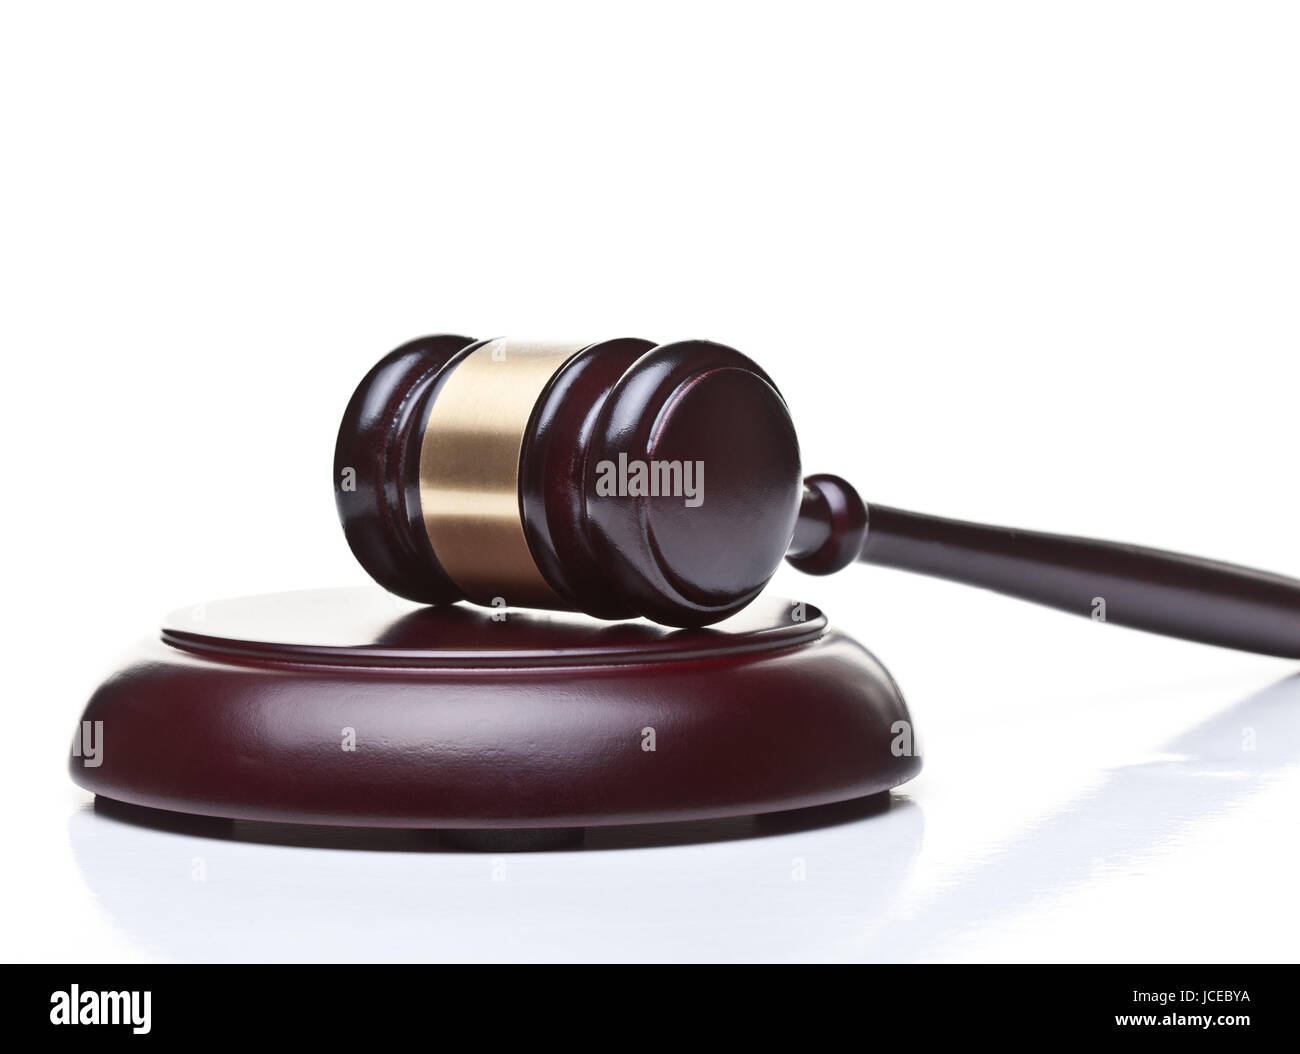 wooden judge gavel on white background Stock Photo